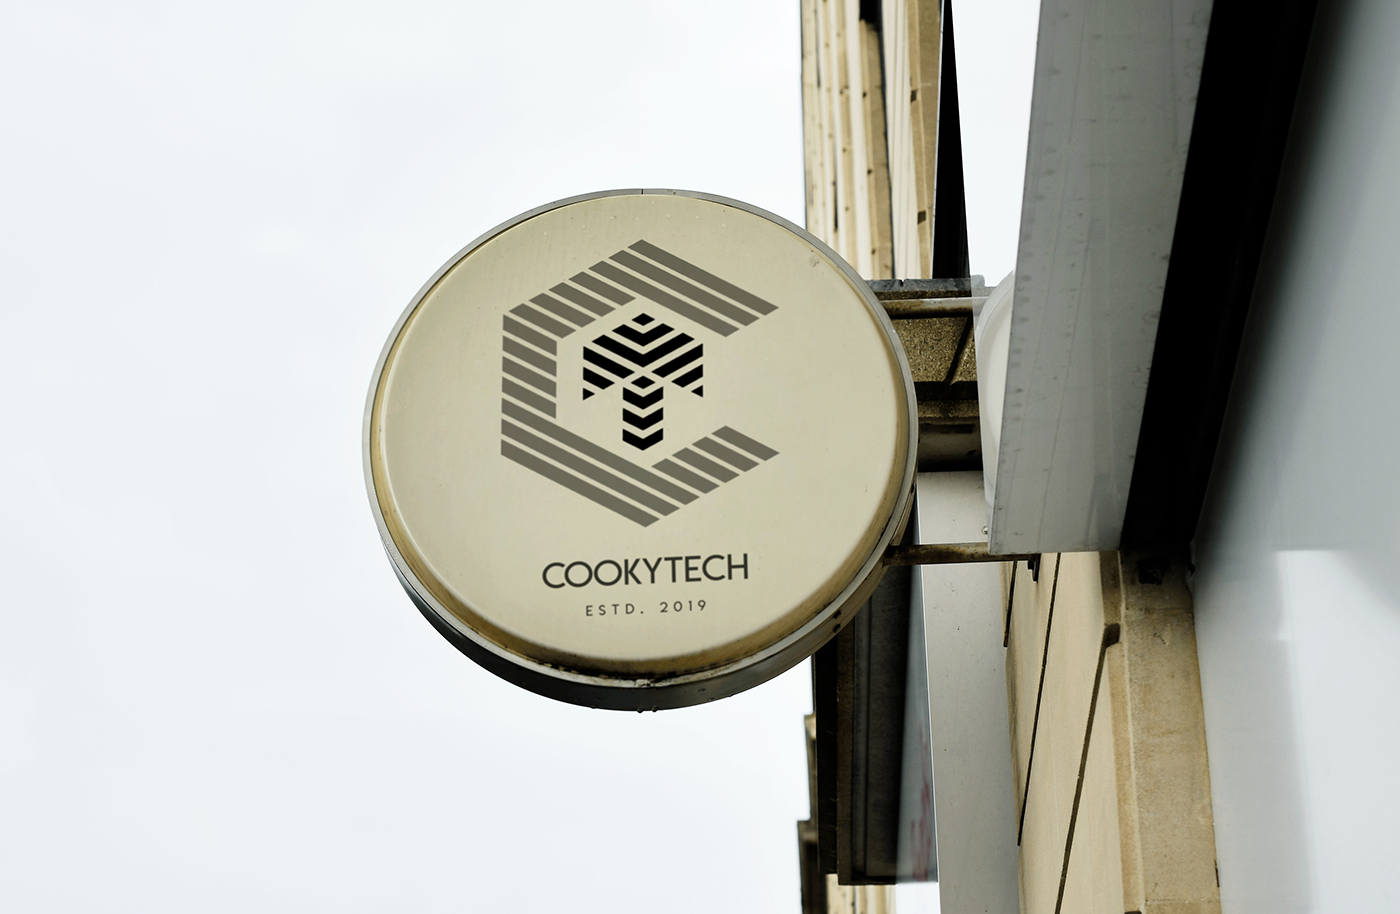 brand logo cookytech cooky tech rounak Bose rounakbose design